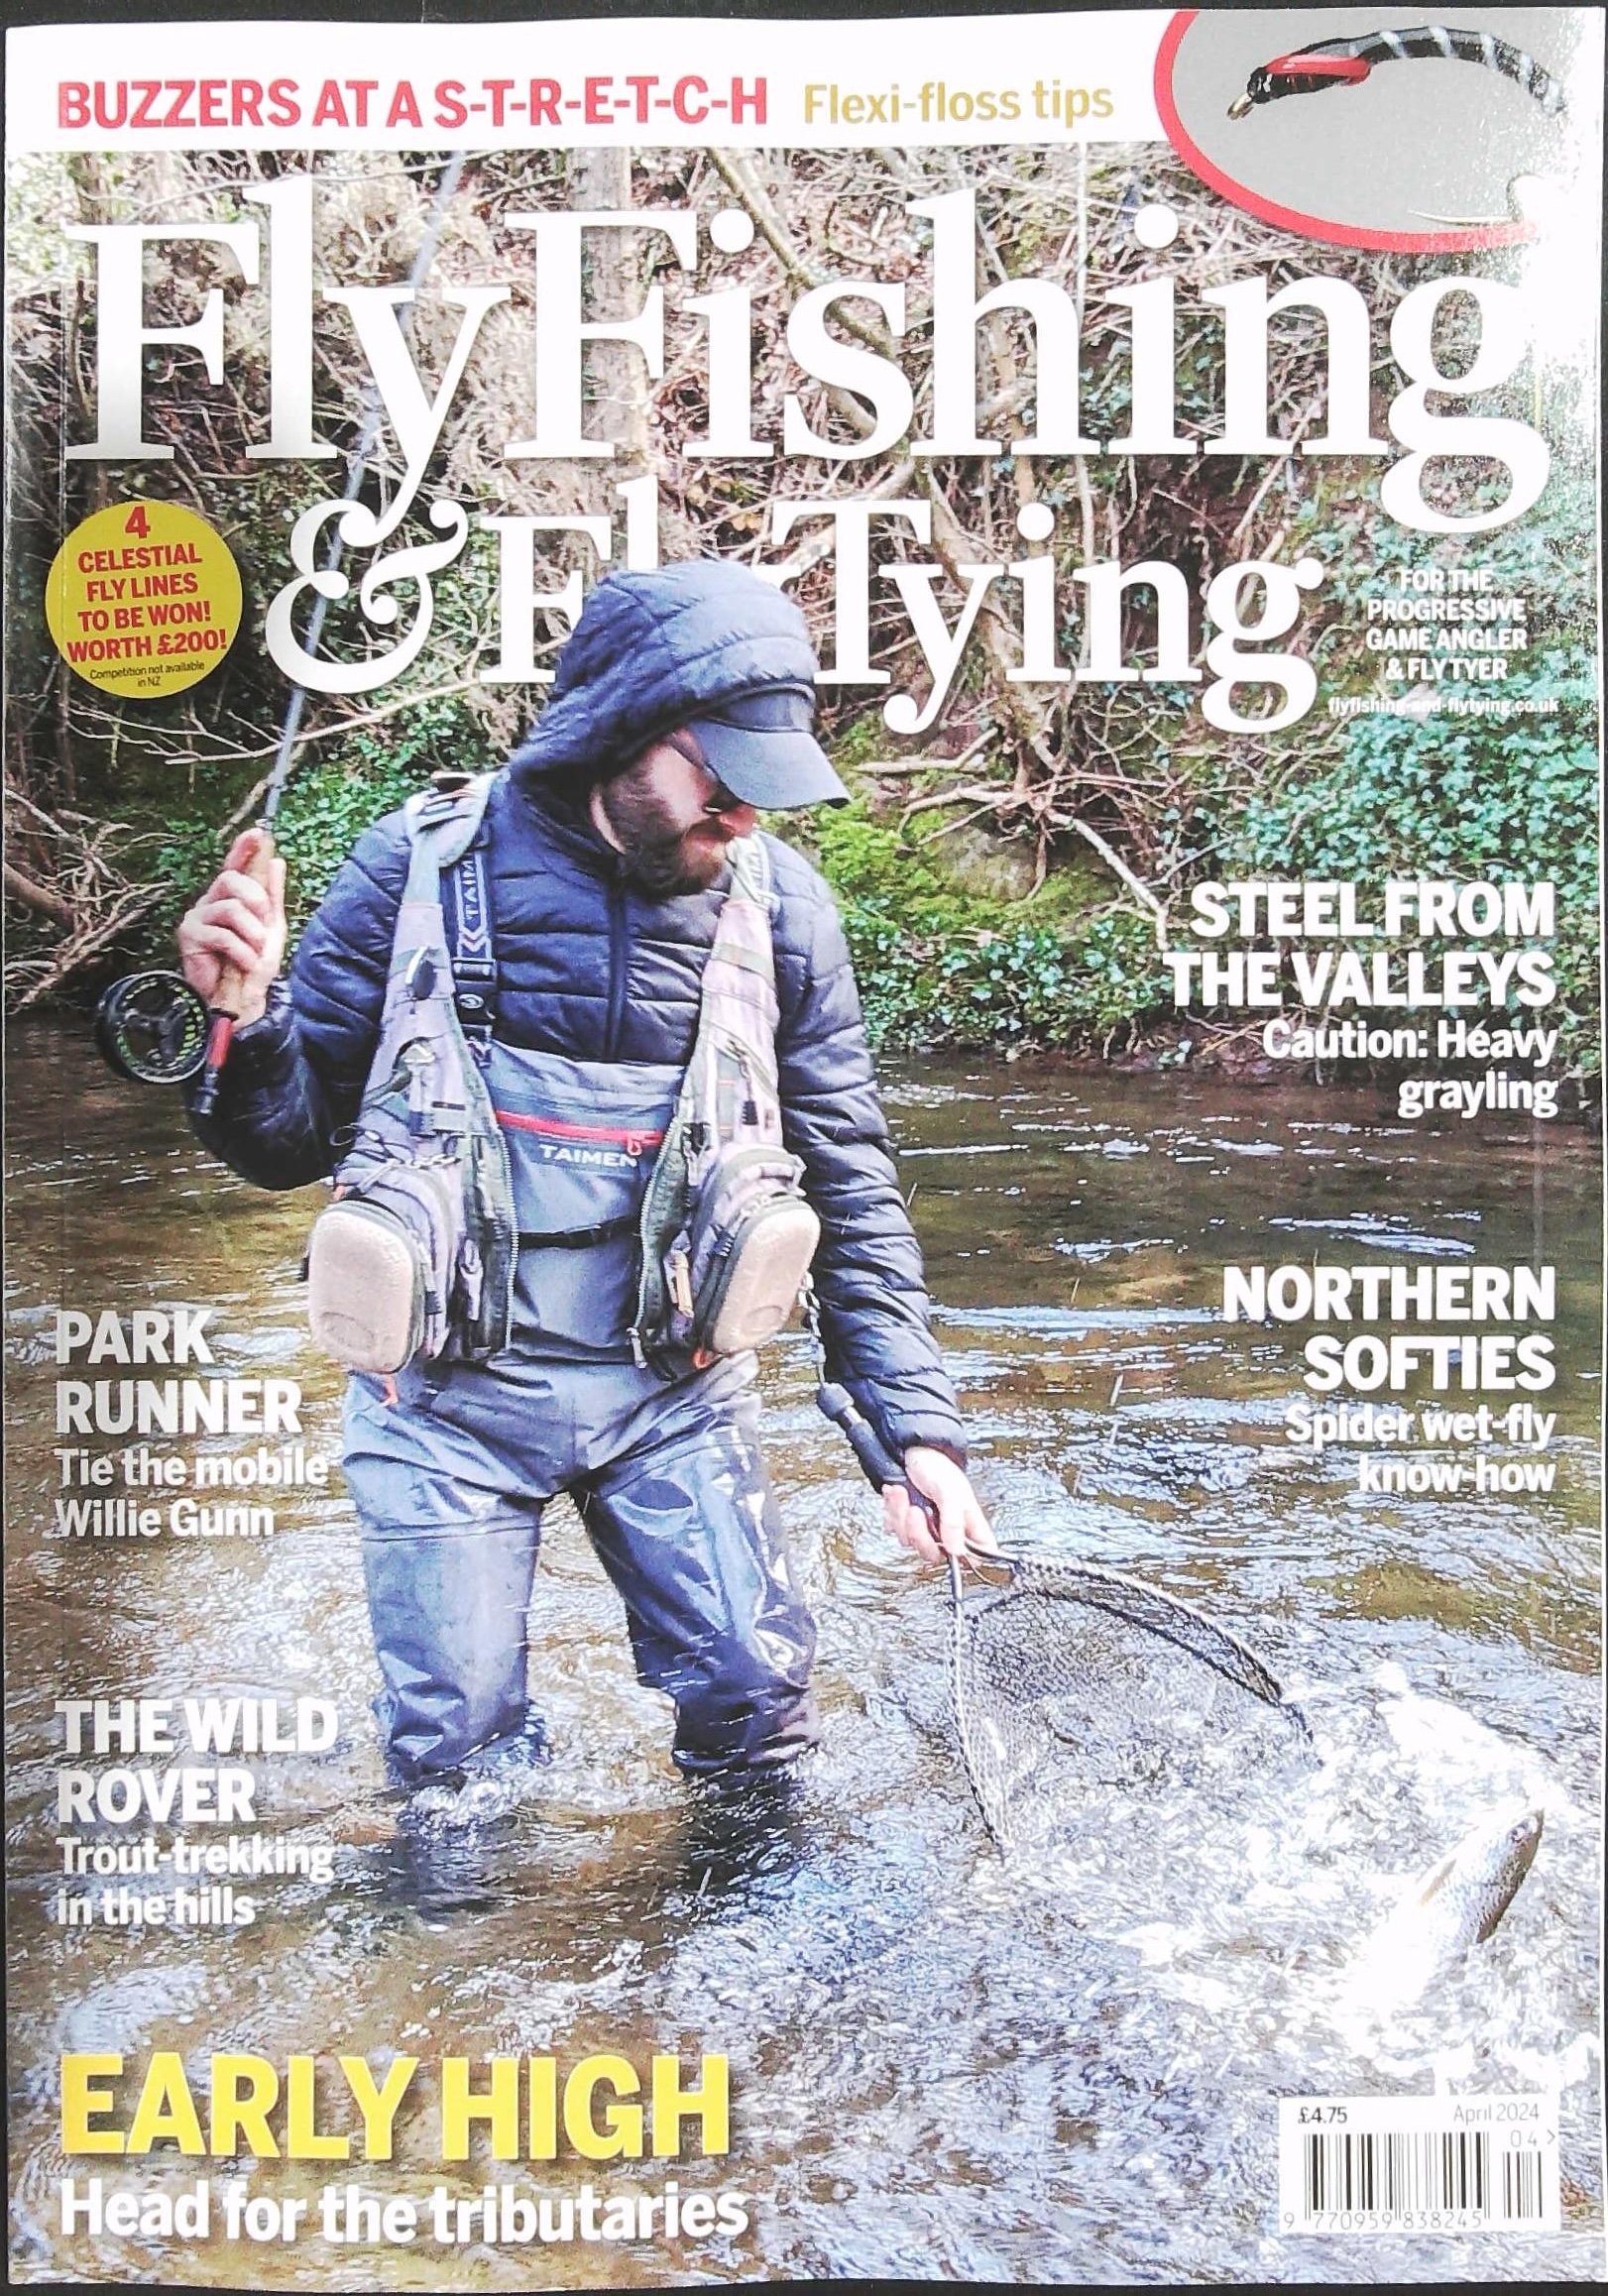 Buy FLY FISHING JOURNAL from Magazine Supermarket